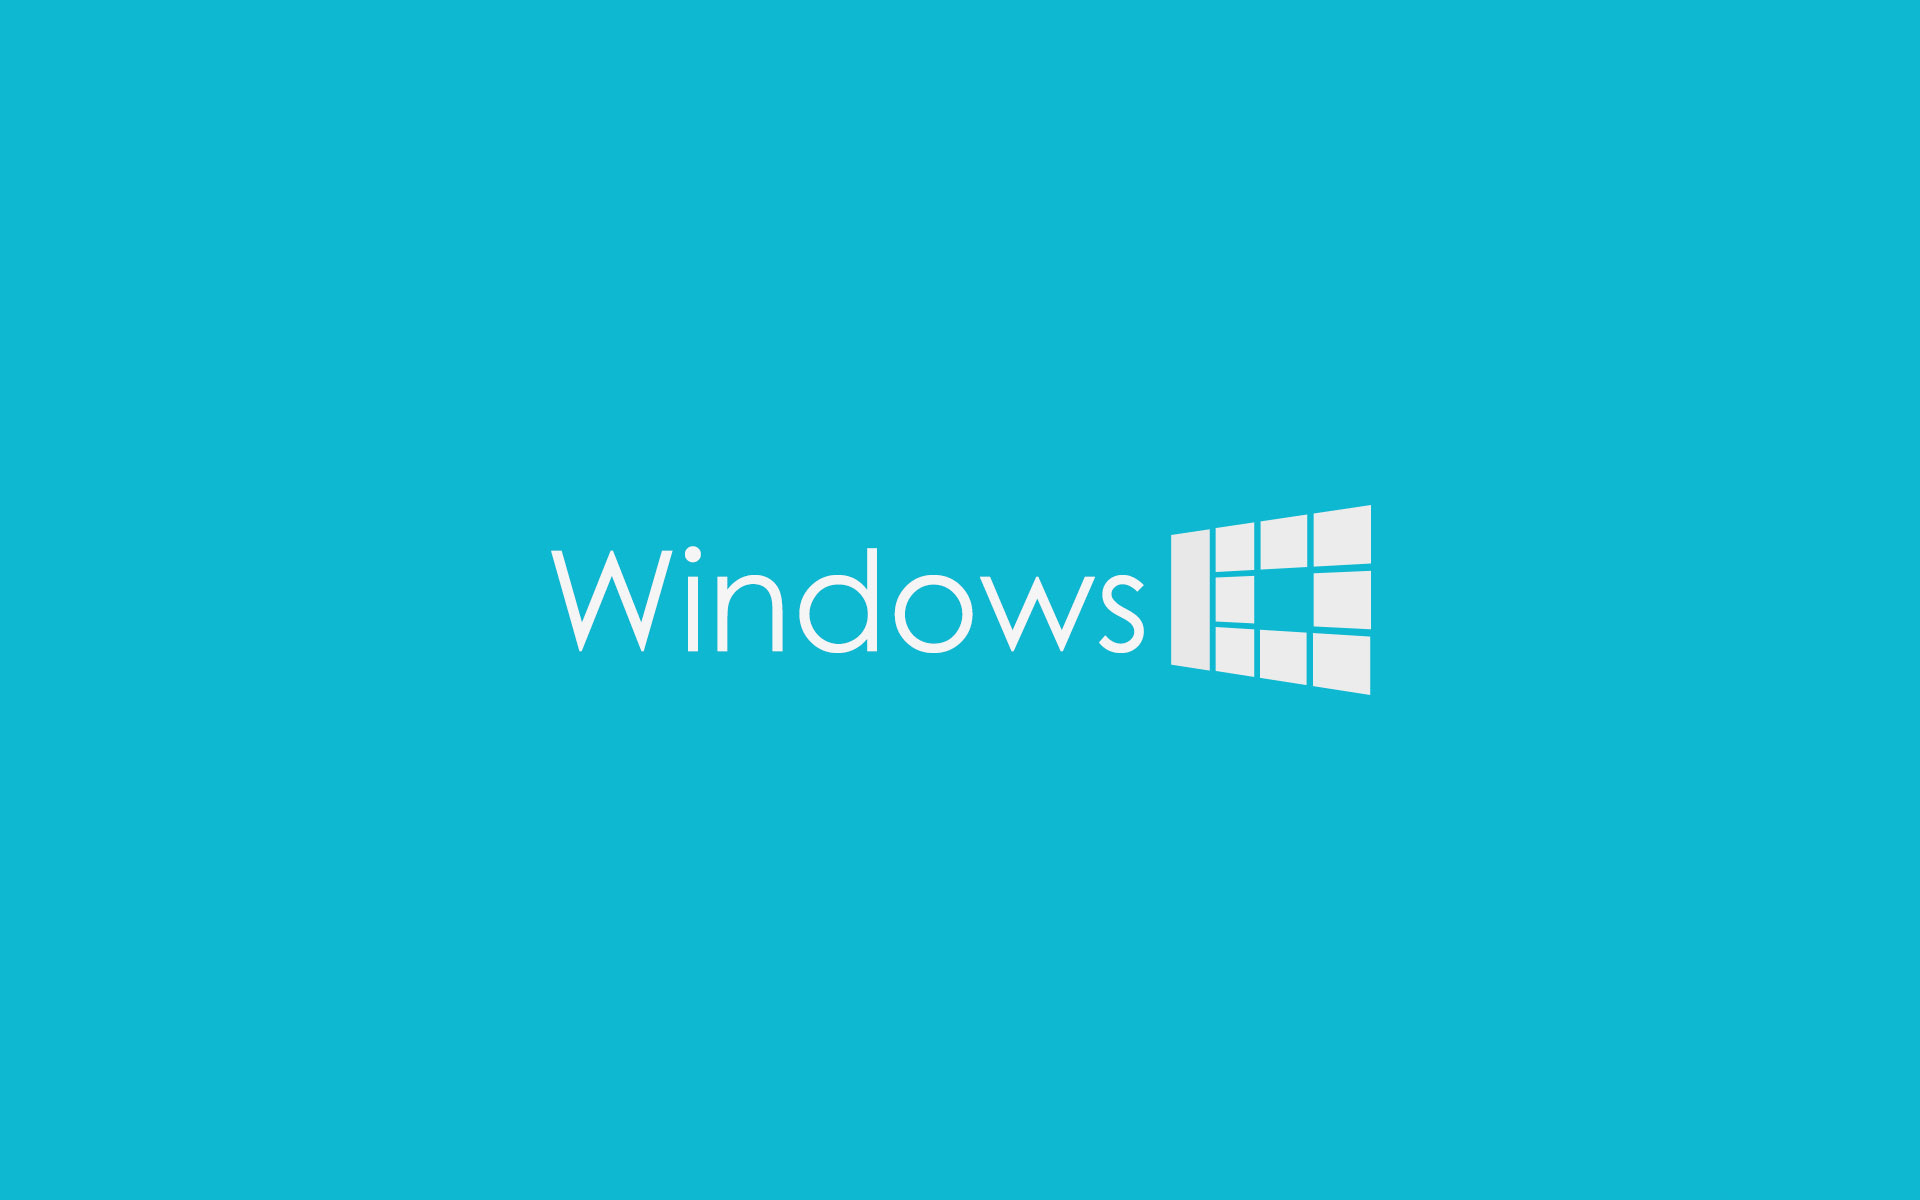 Windows Wallpaper Microsoft